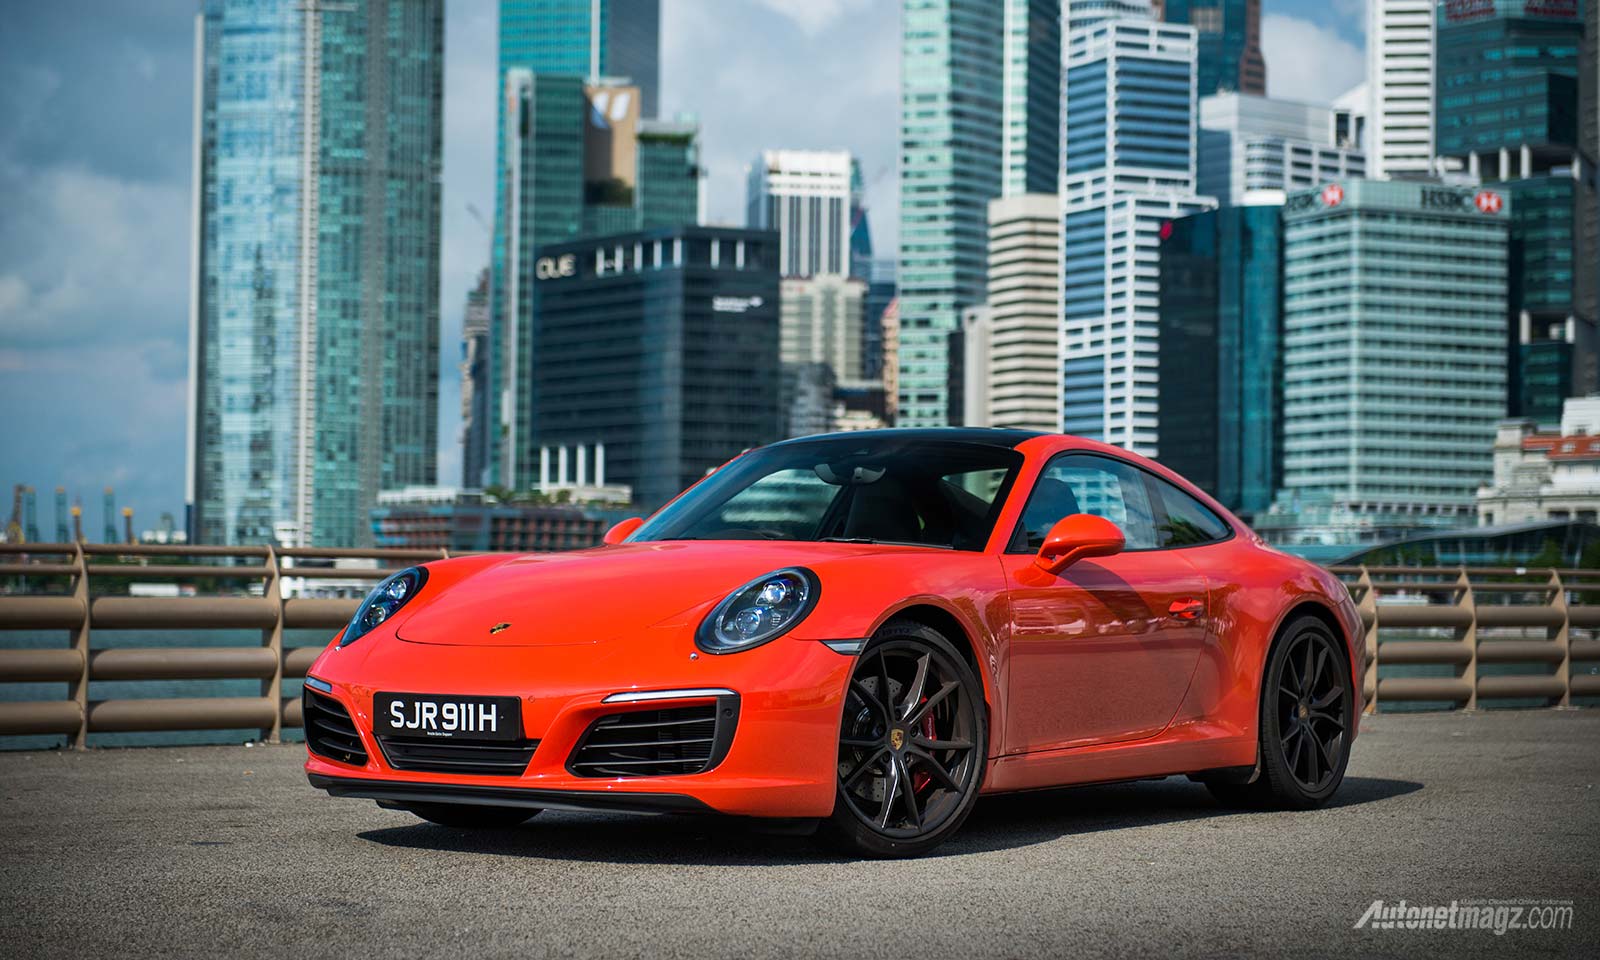 International, Review Porsche 911 Carrera S in Singapore by AutonetMagz: First Impression Review Porsche 911 Carrera S